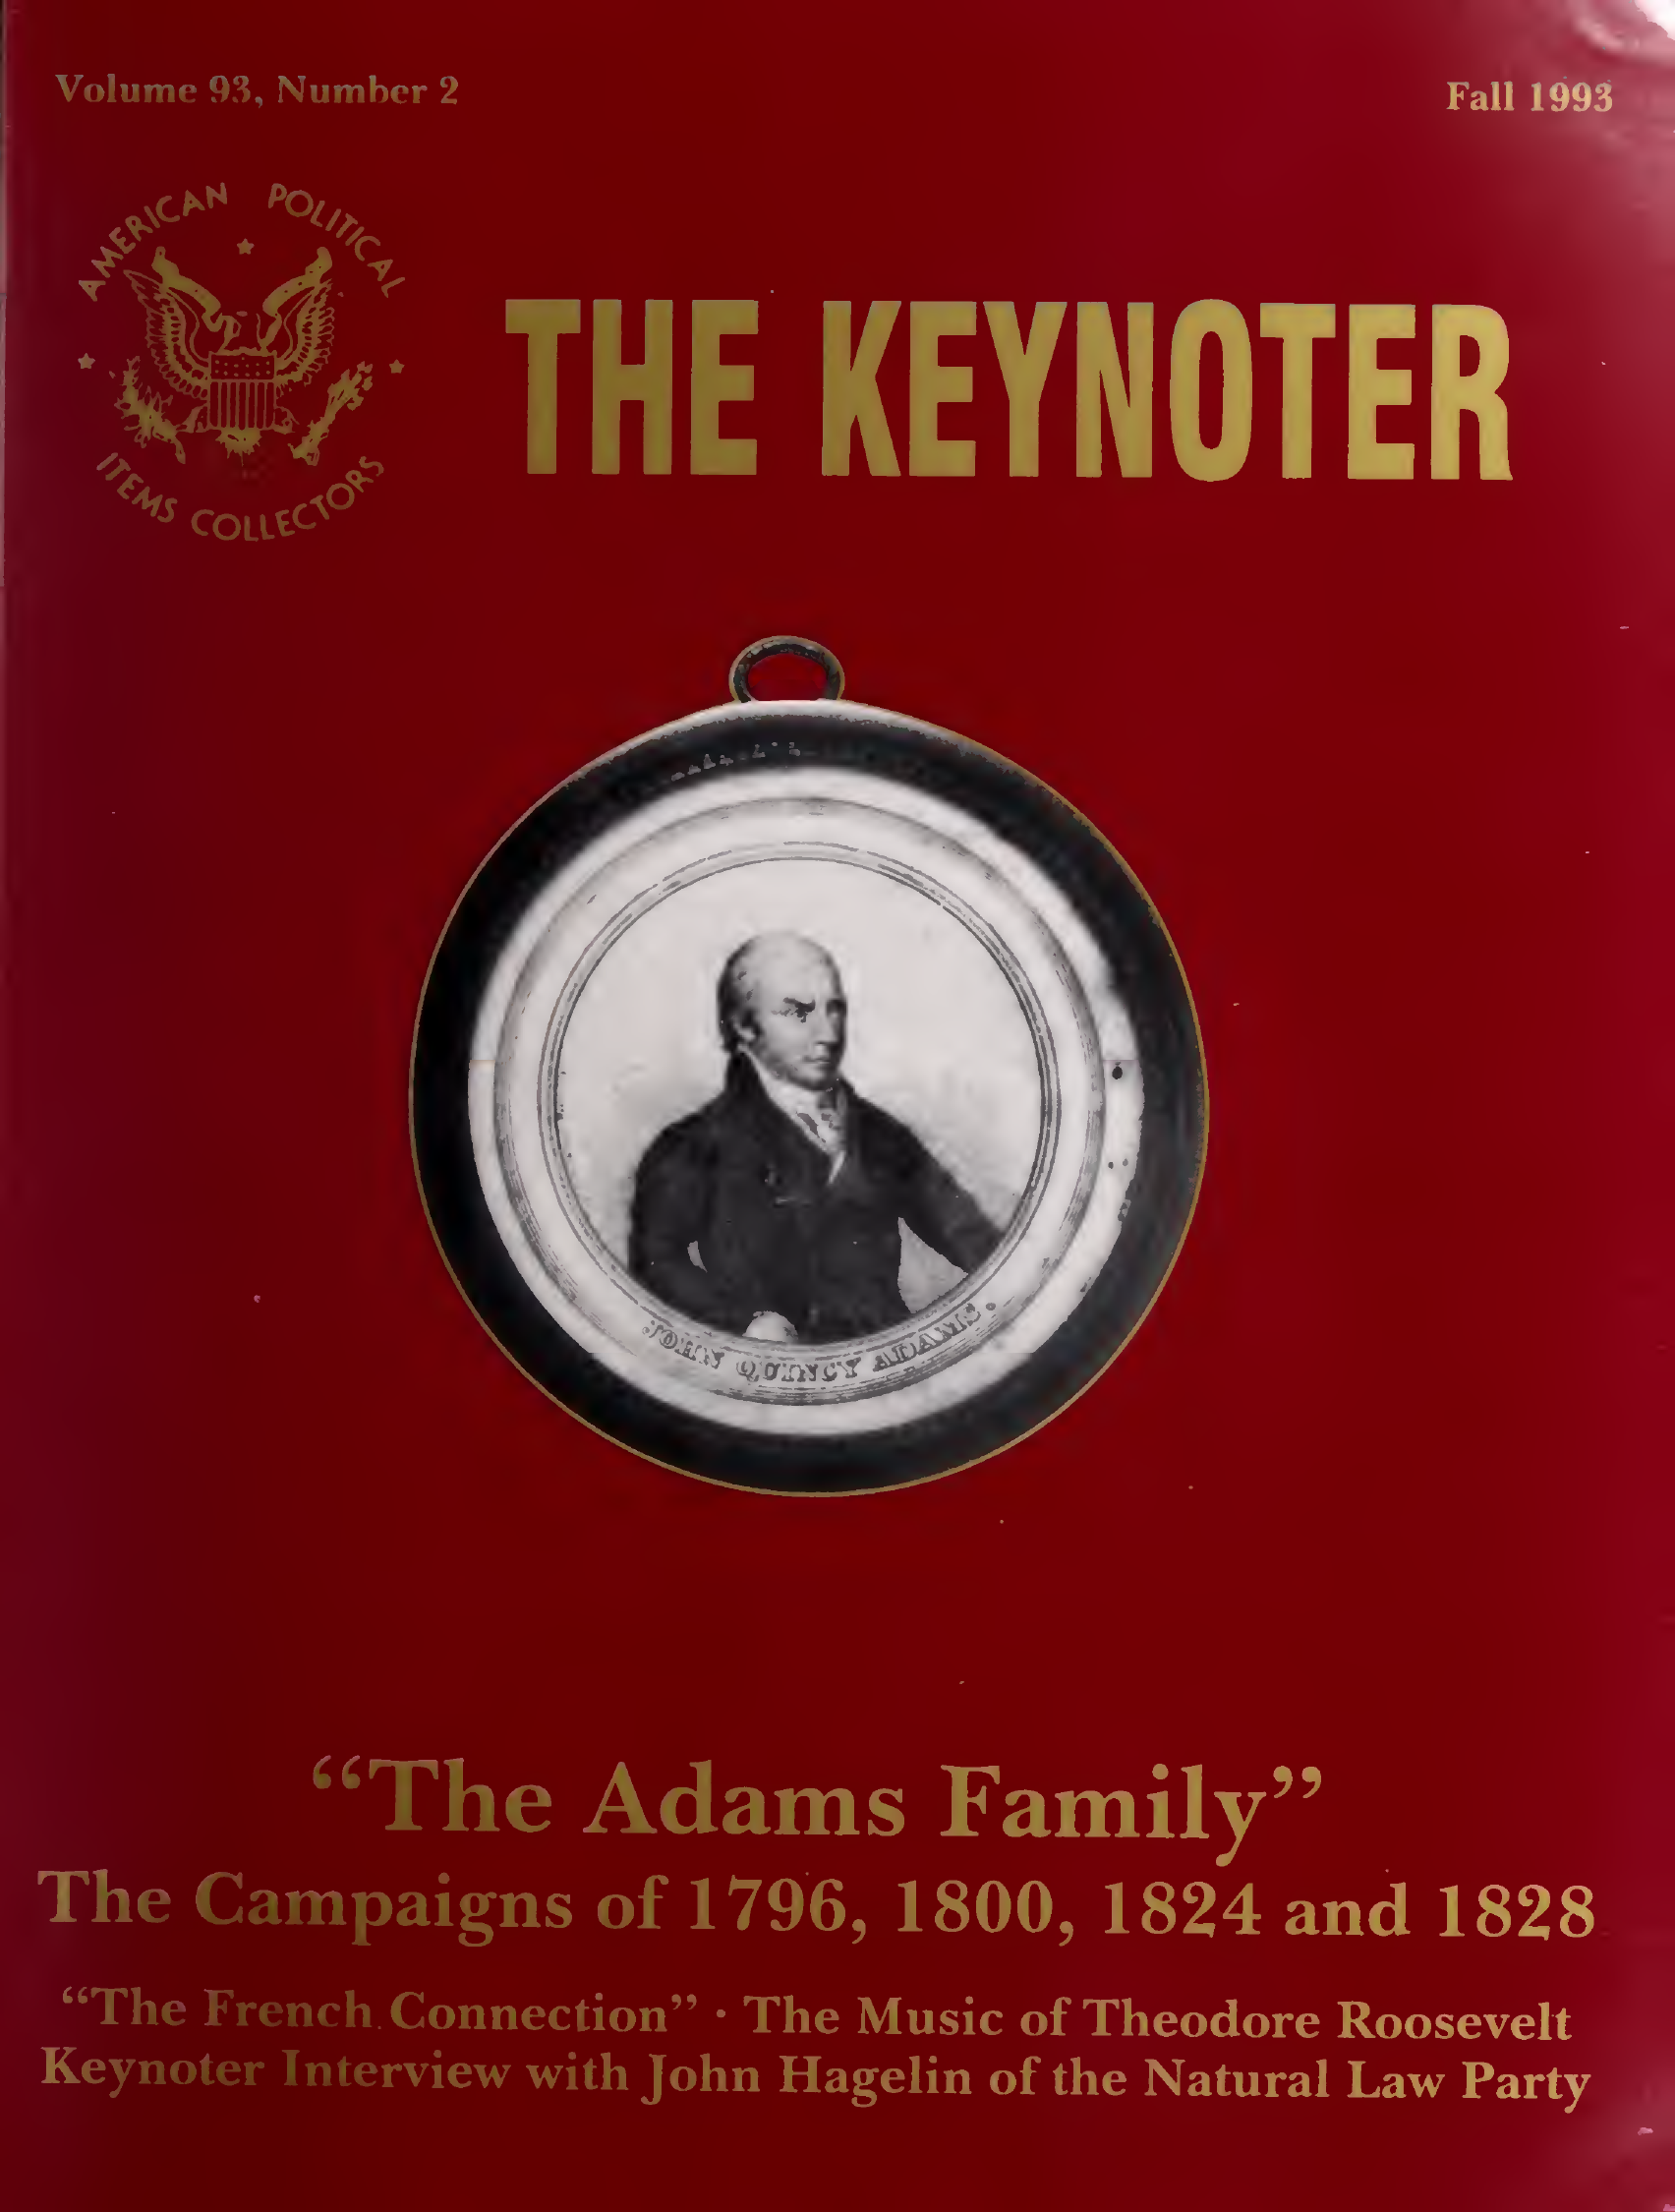 Keynoter 1993 - Fall - Issue 2